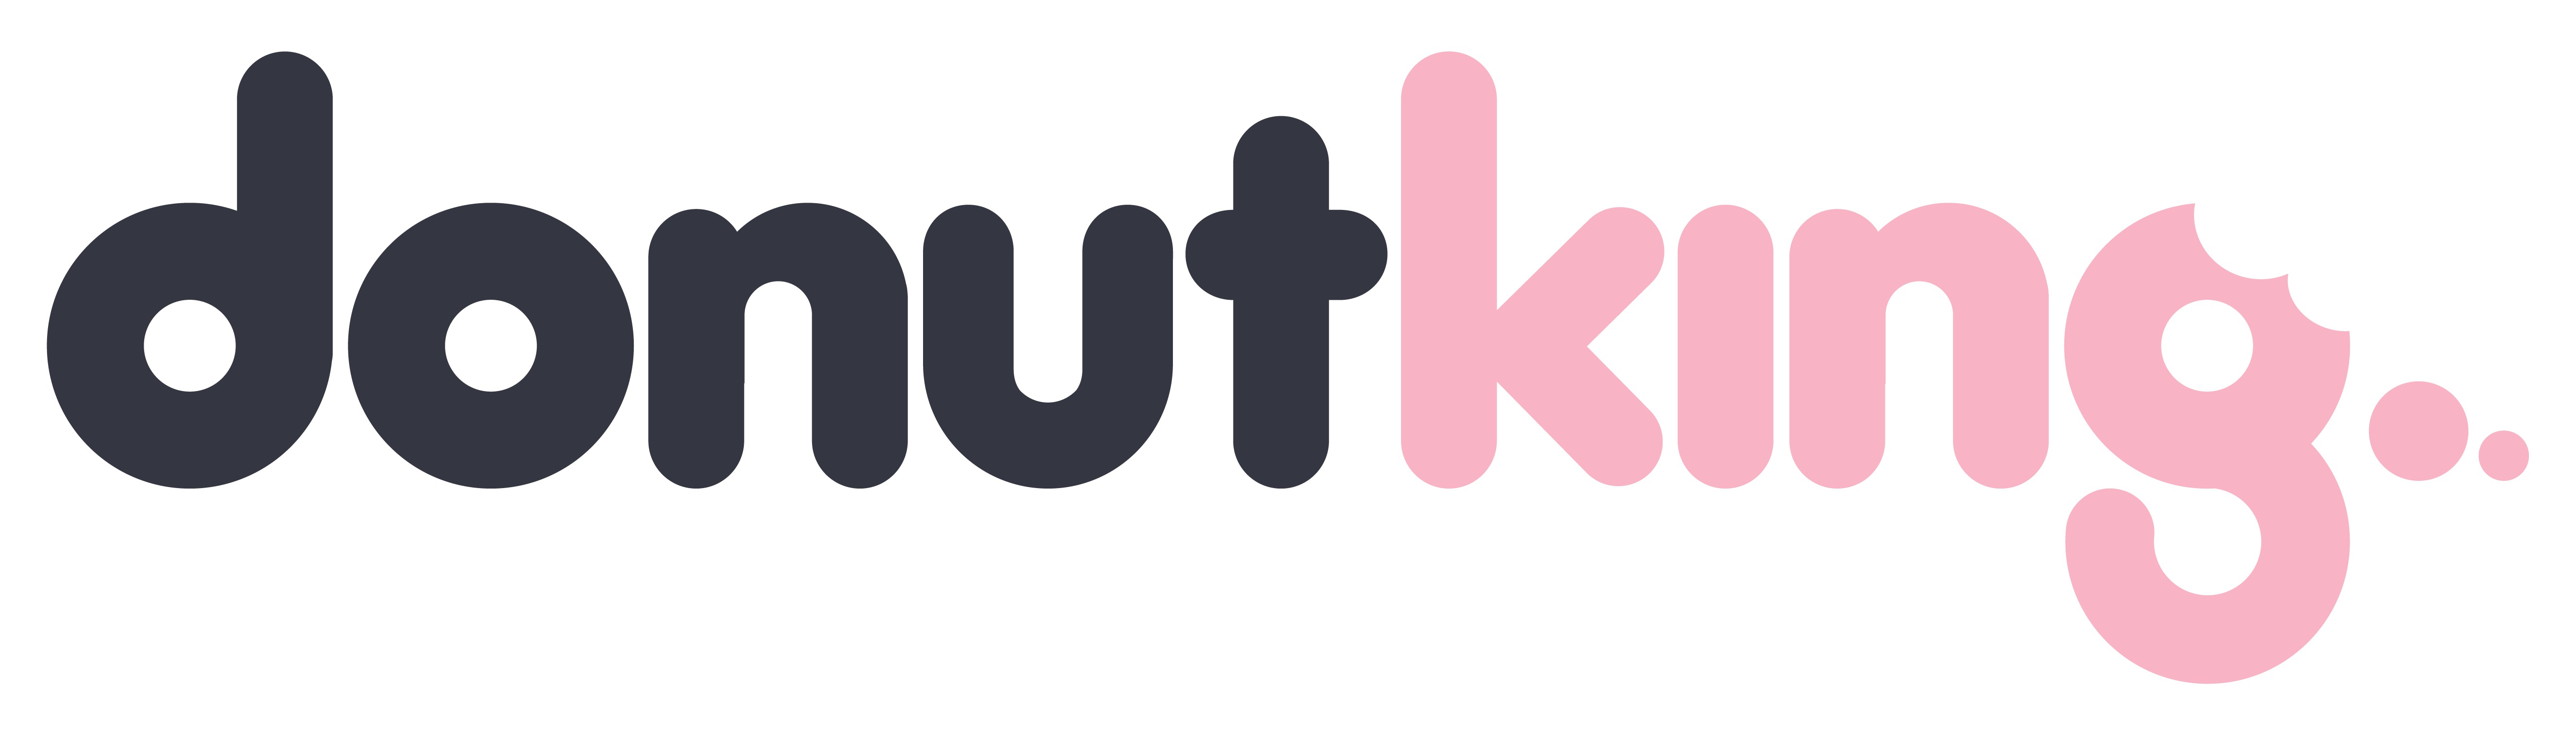 Donut King Logo